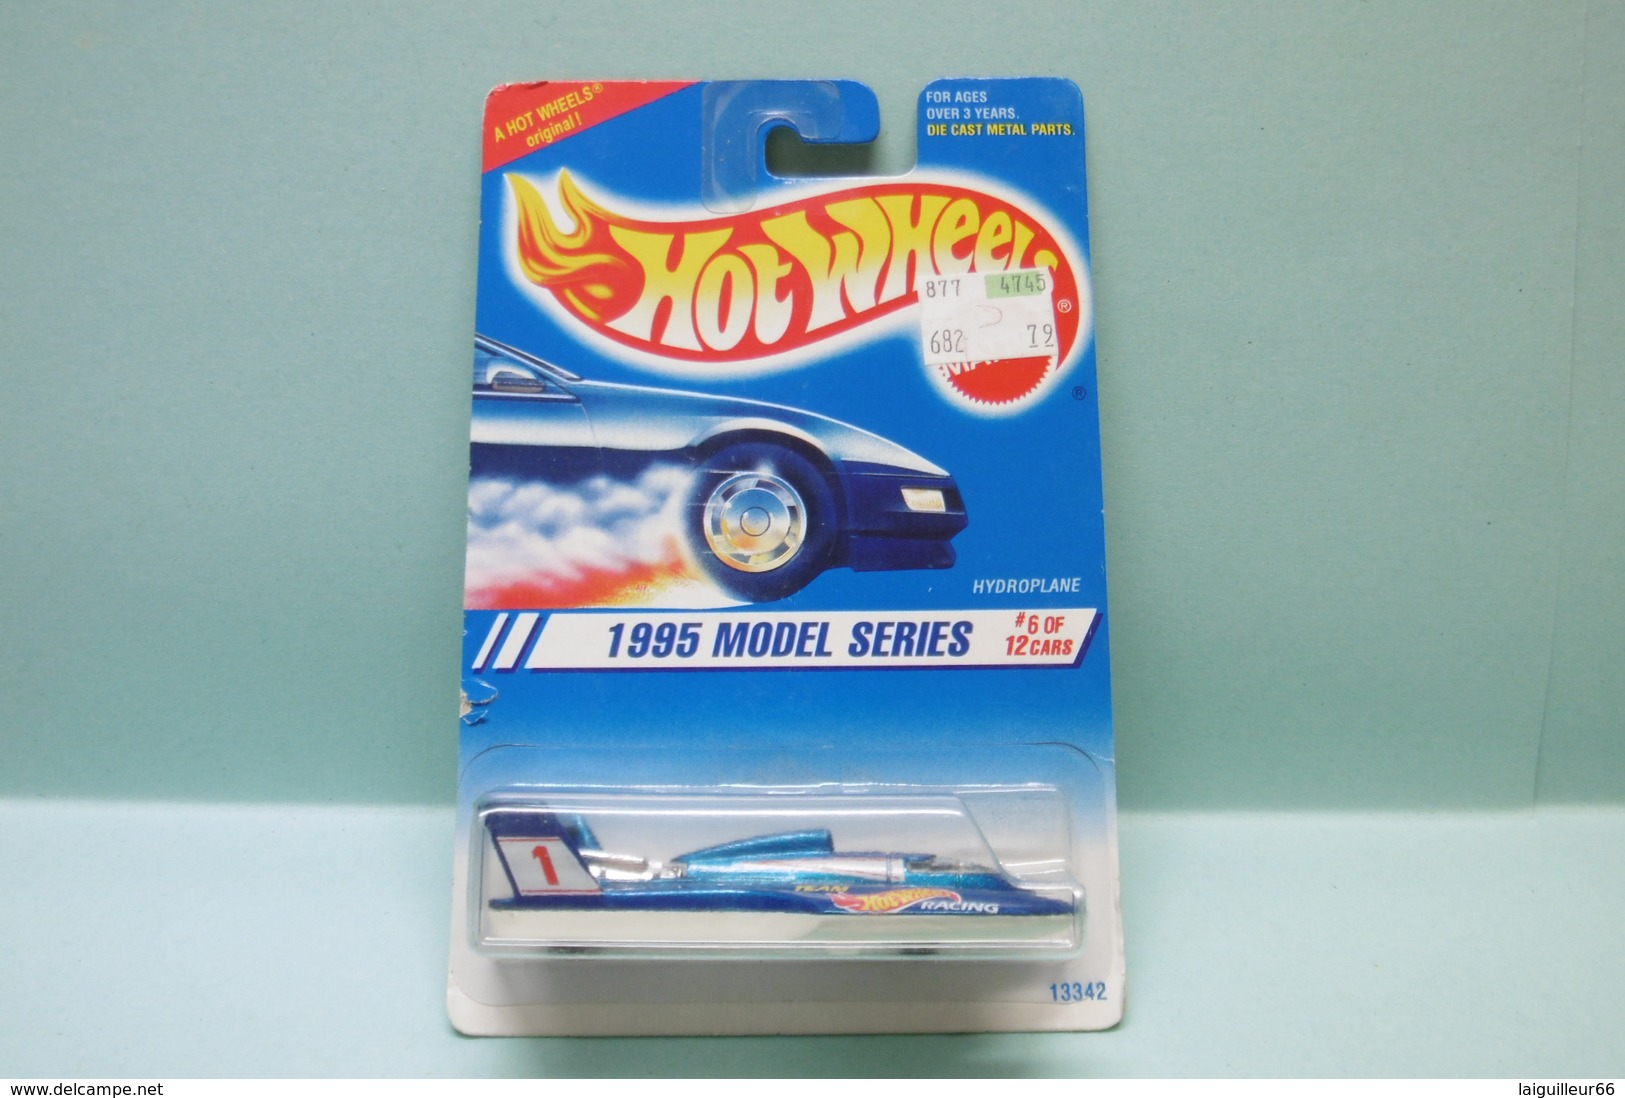 Hot Wheels - HYDROPLANE - 1995 Model Series - Collector 346 HOTWHEELS US Long Card 1/64 - HotWheels